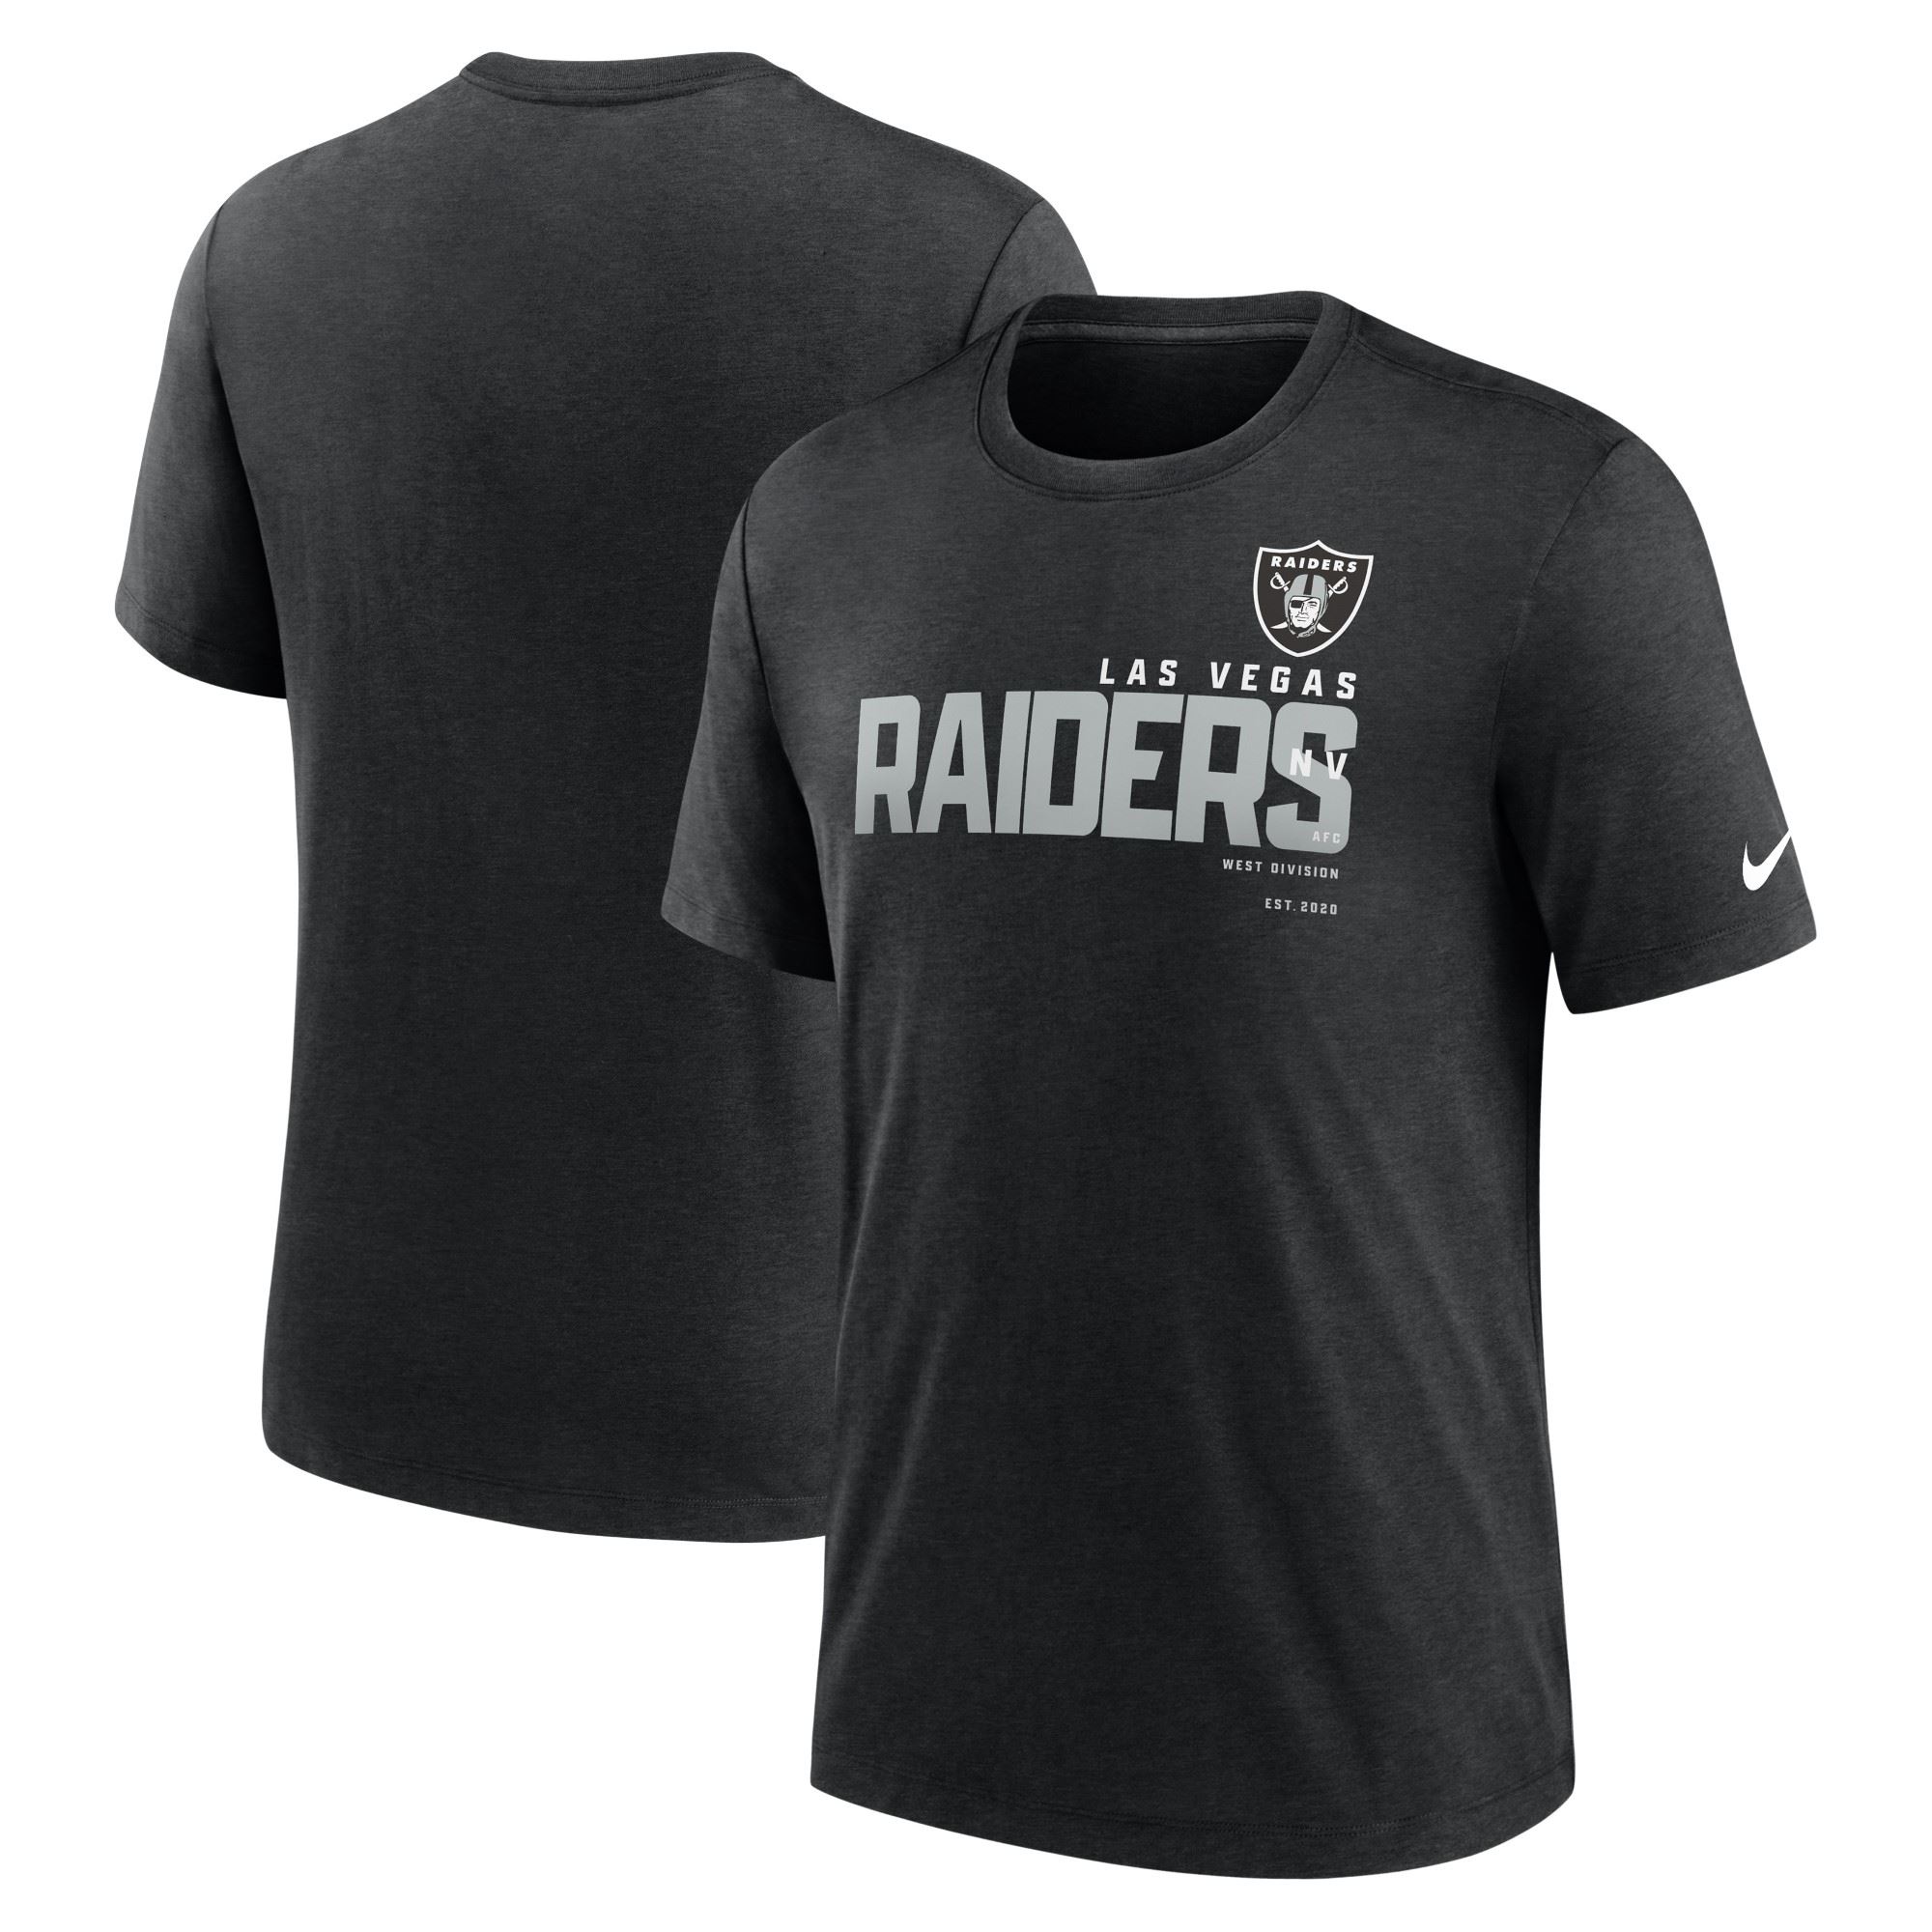 Las Vegas Raiders NFL Triblend Team Name Black Heather T-Shirt Nike